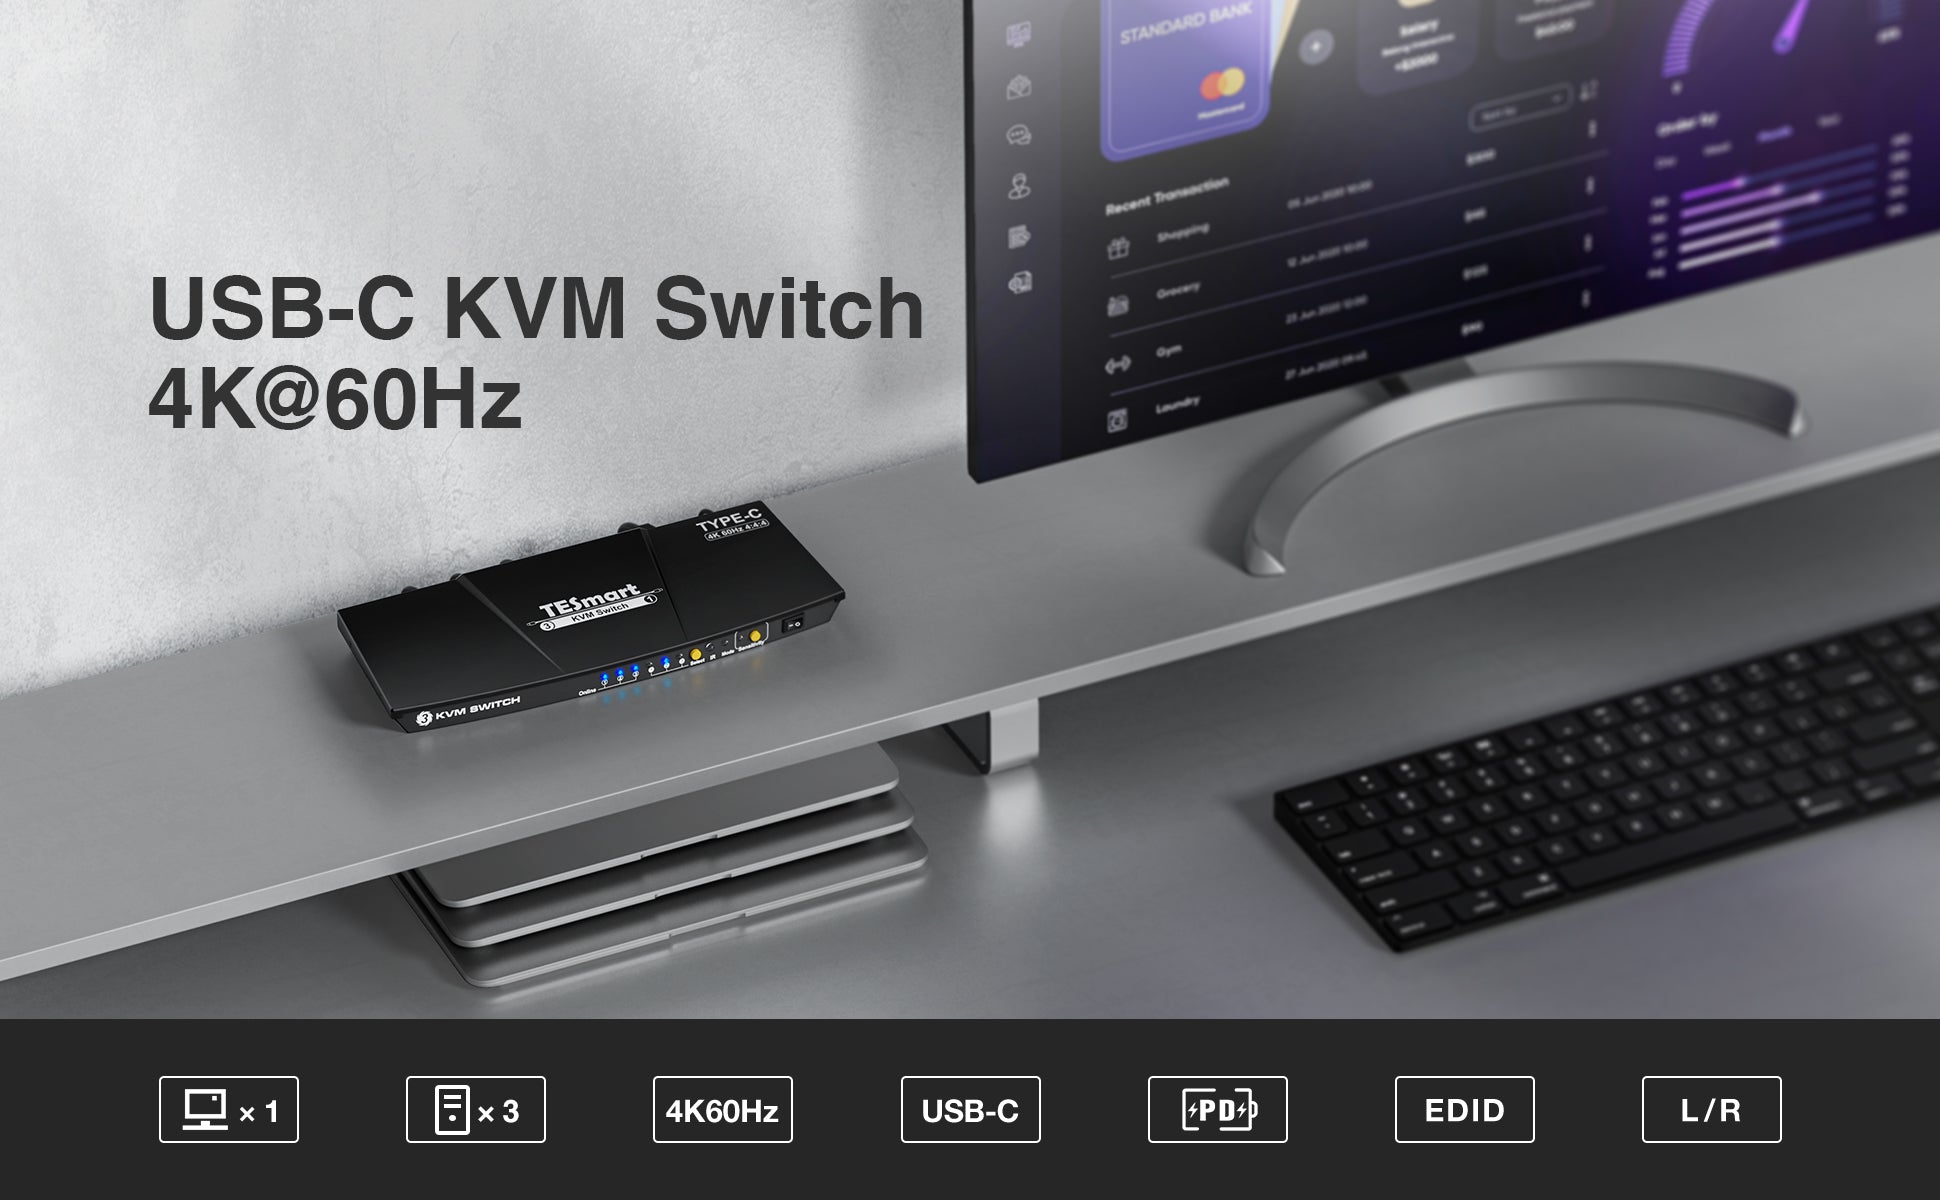 USB-C KVM switch 3 port 4K60Hz with EDID,USB hub TESmart